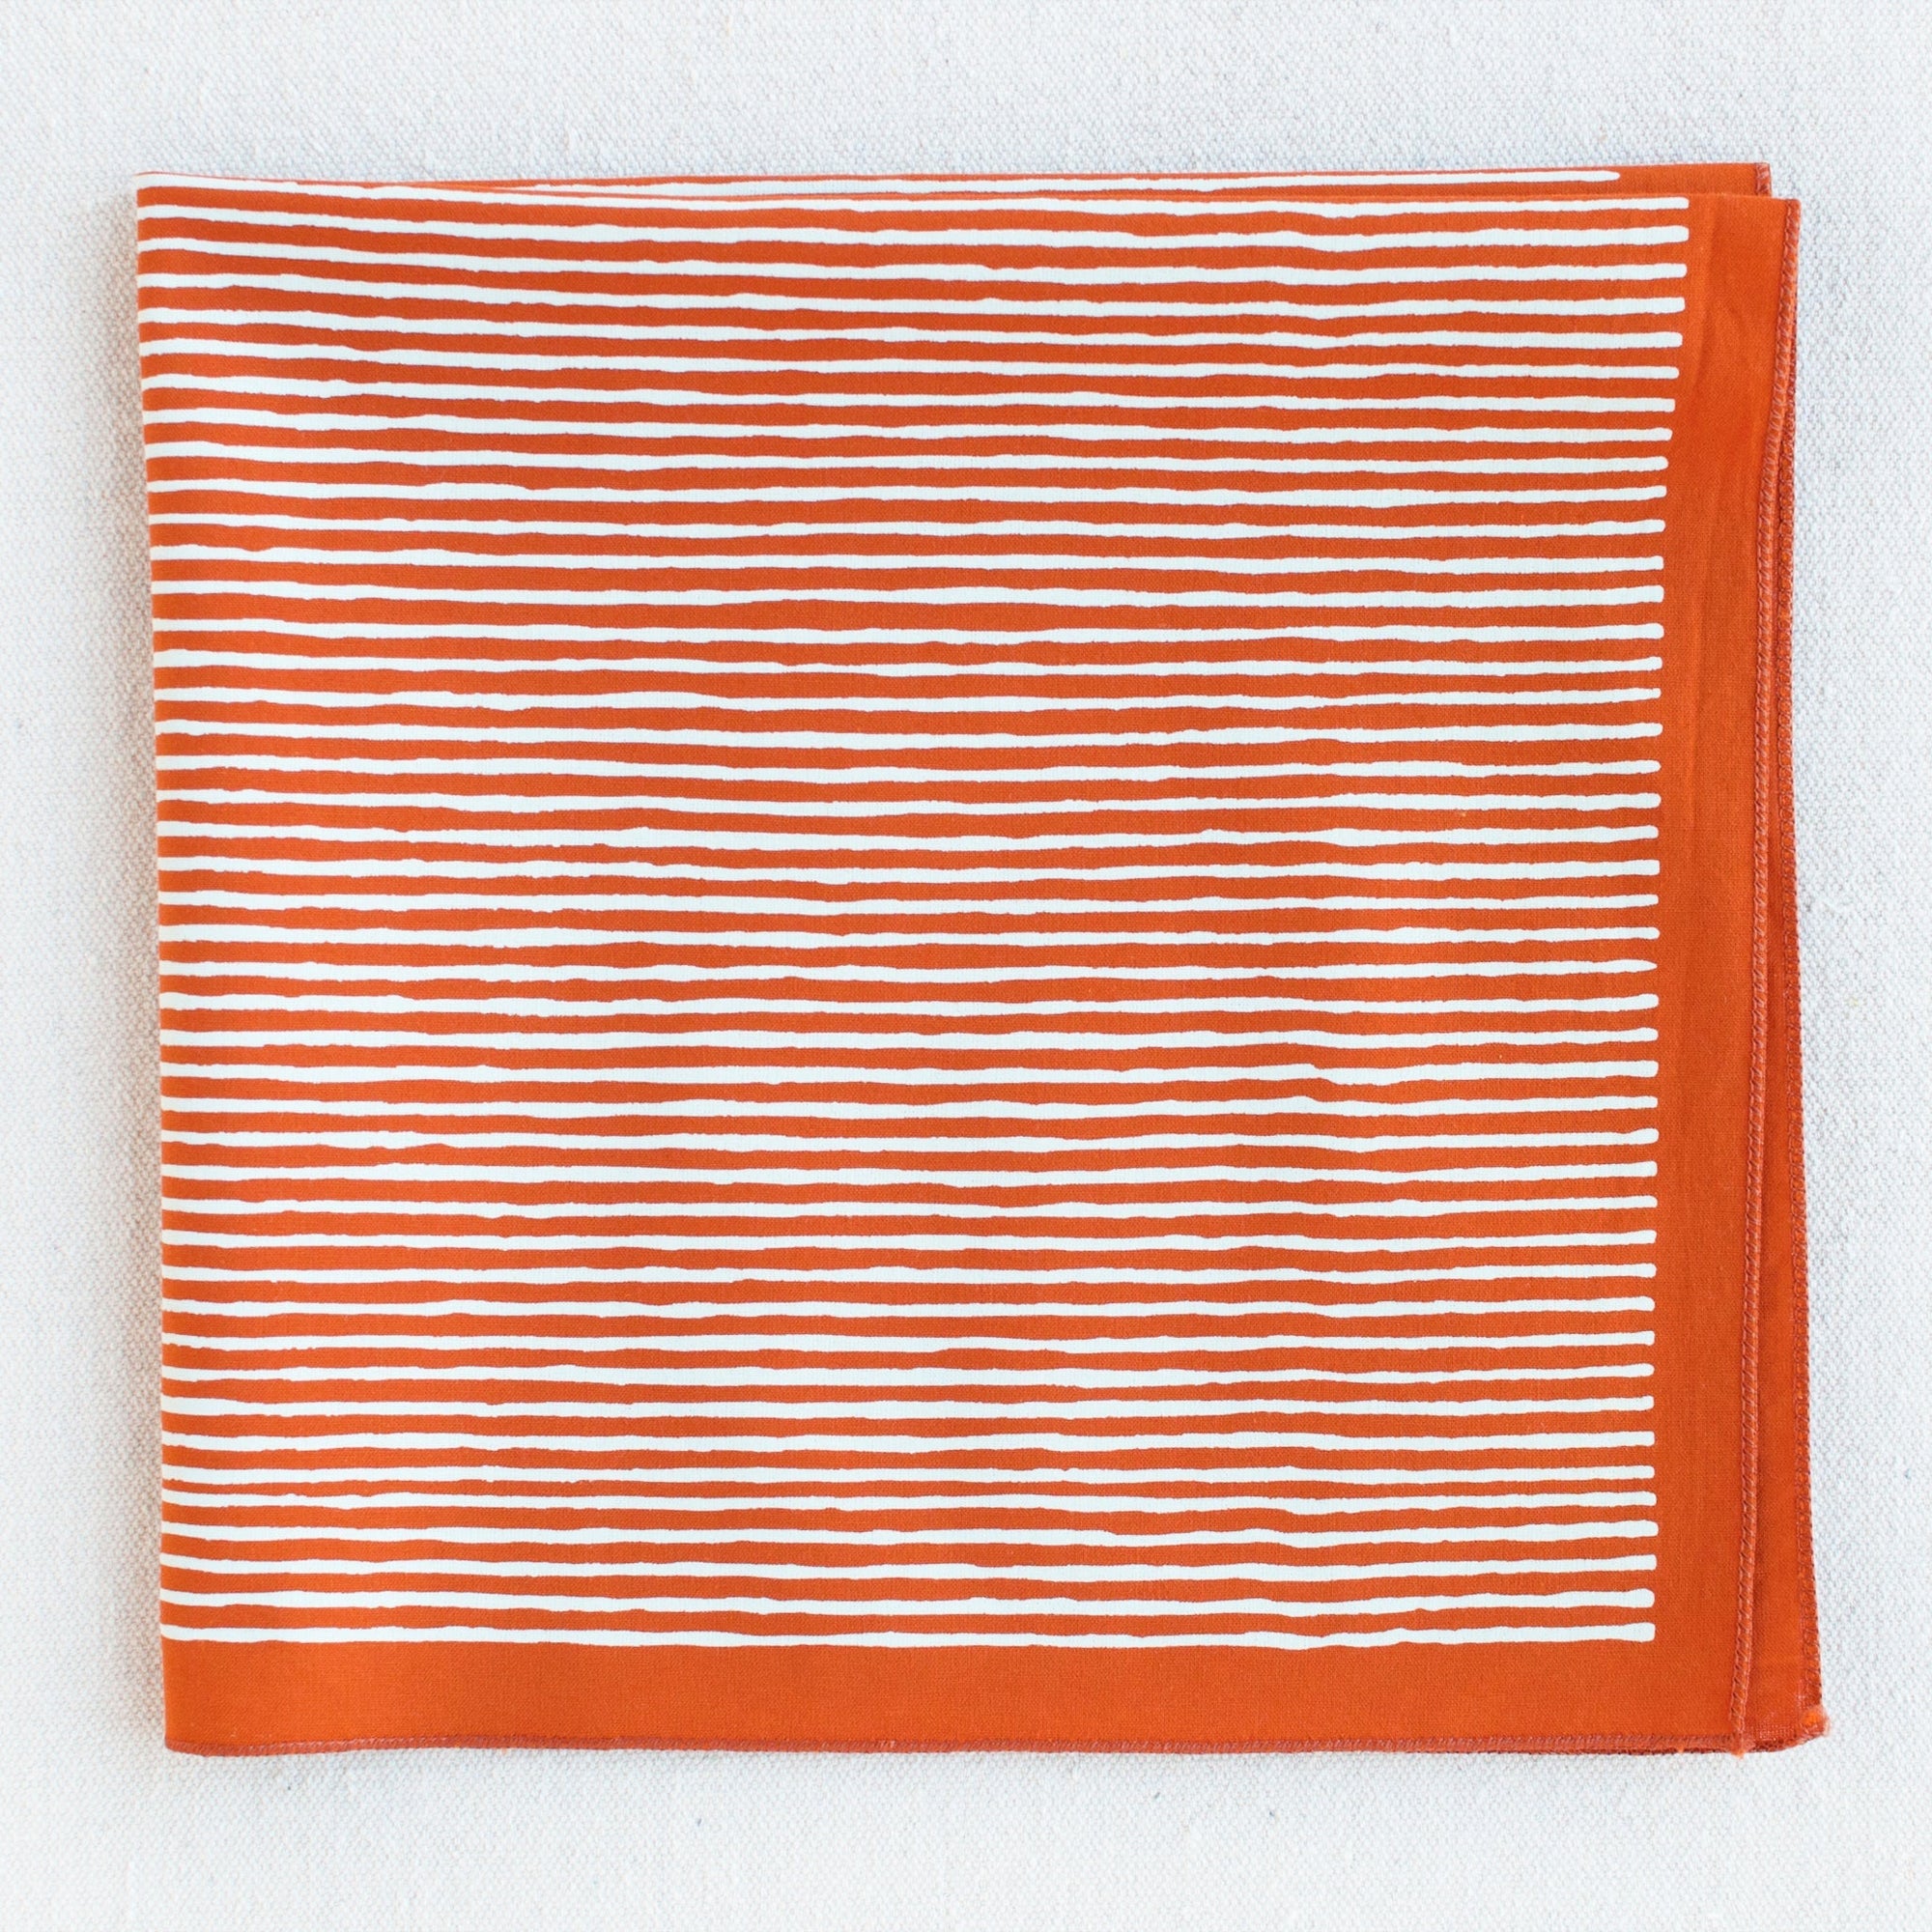 Striped Bandana- Marmalade Orange Abracadana 